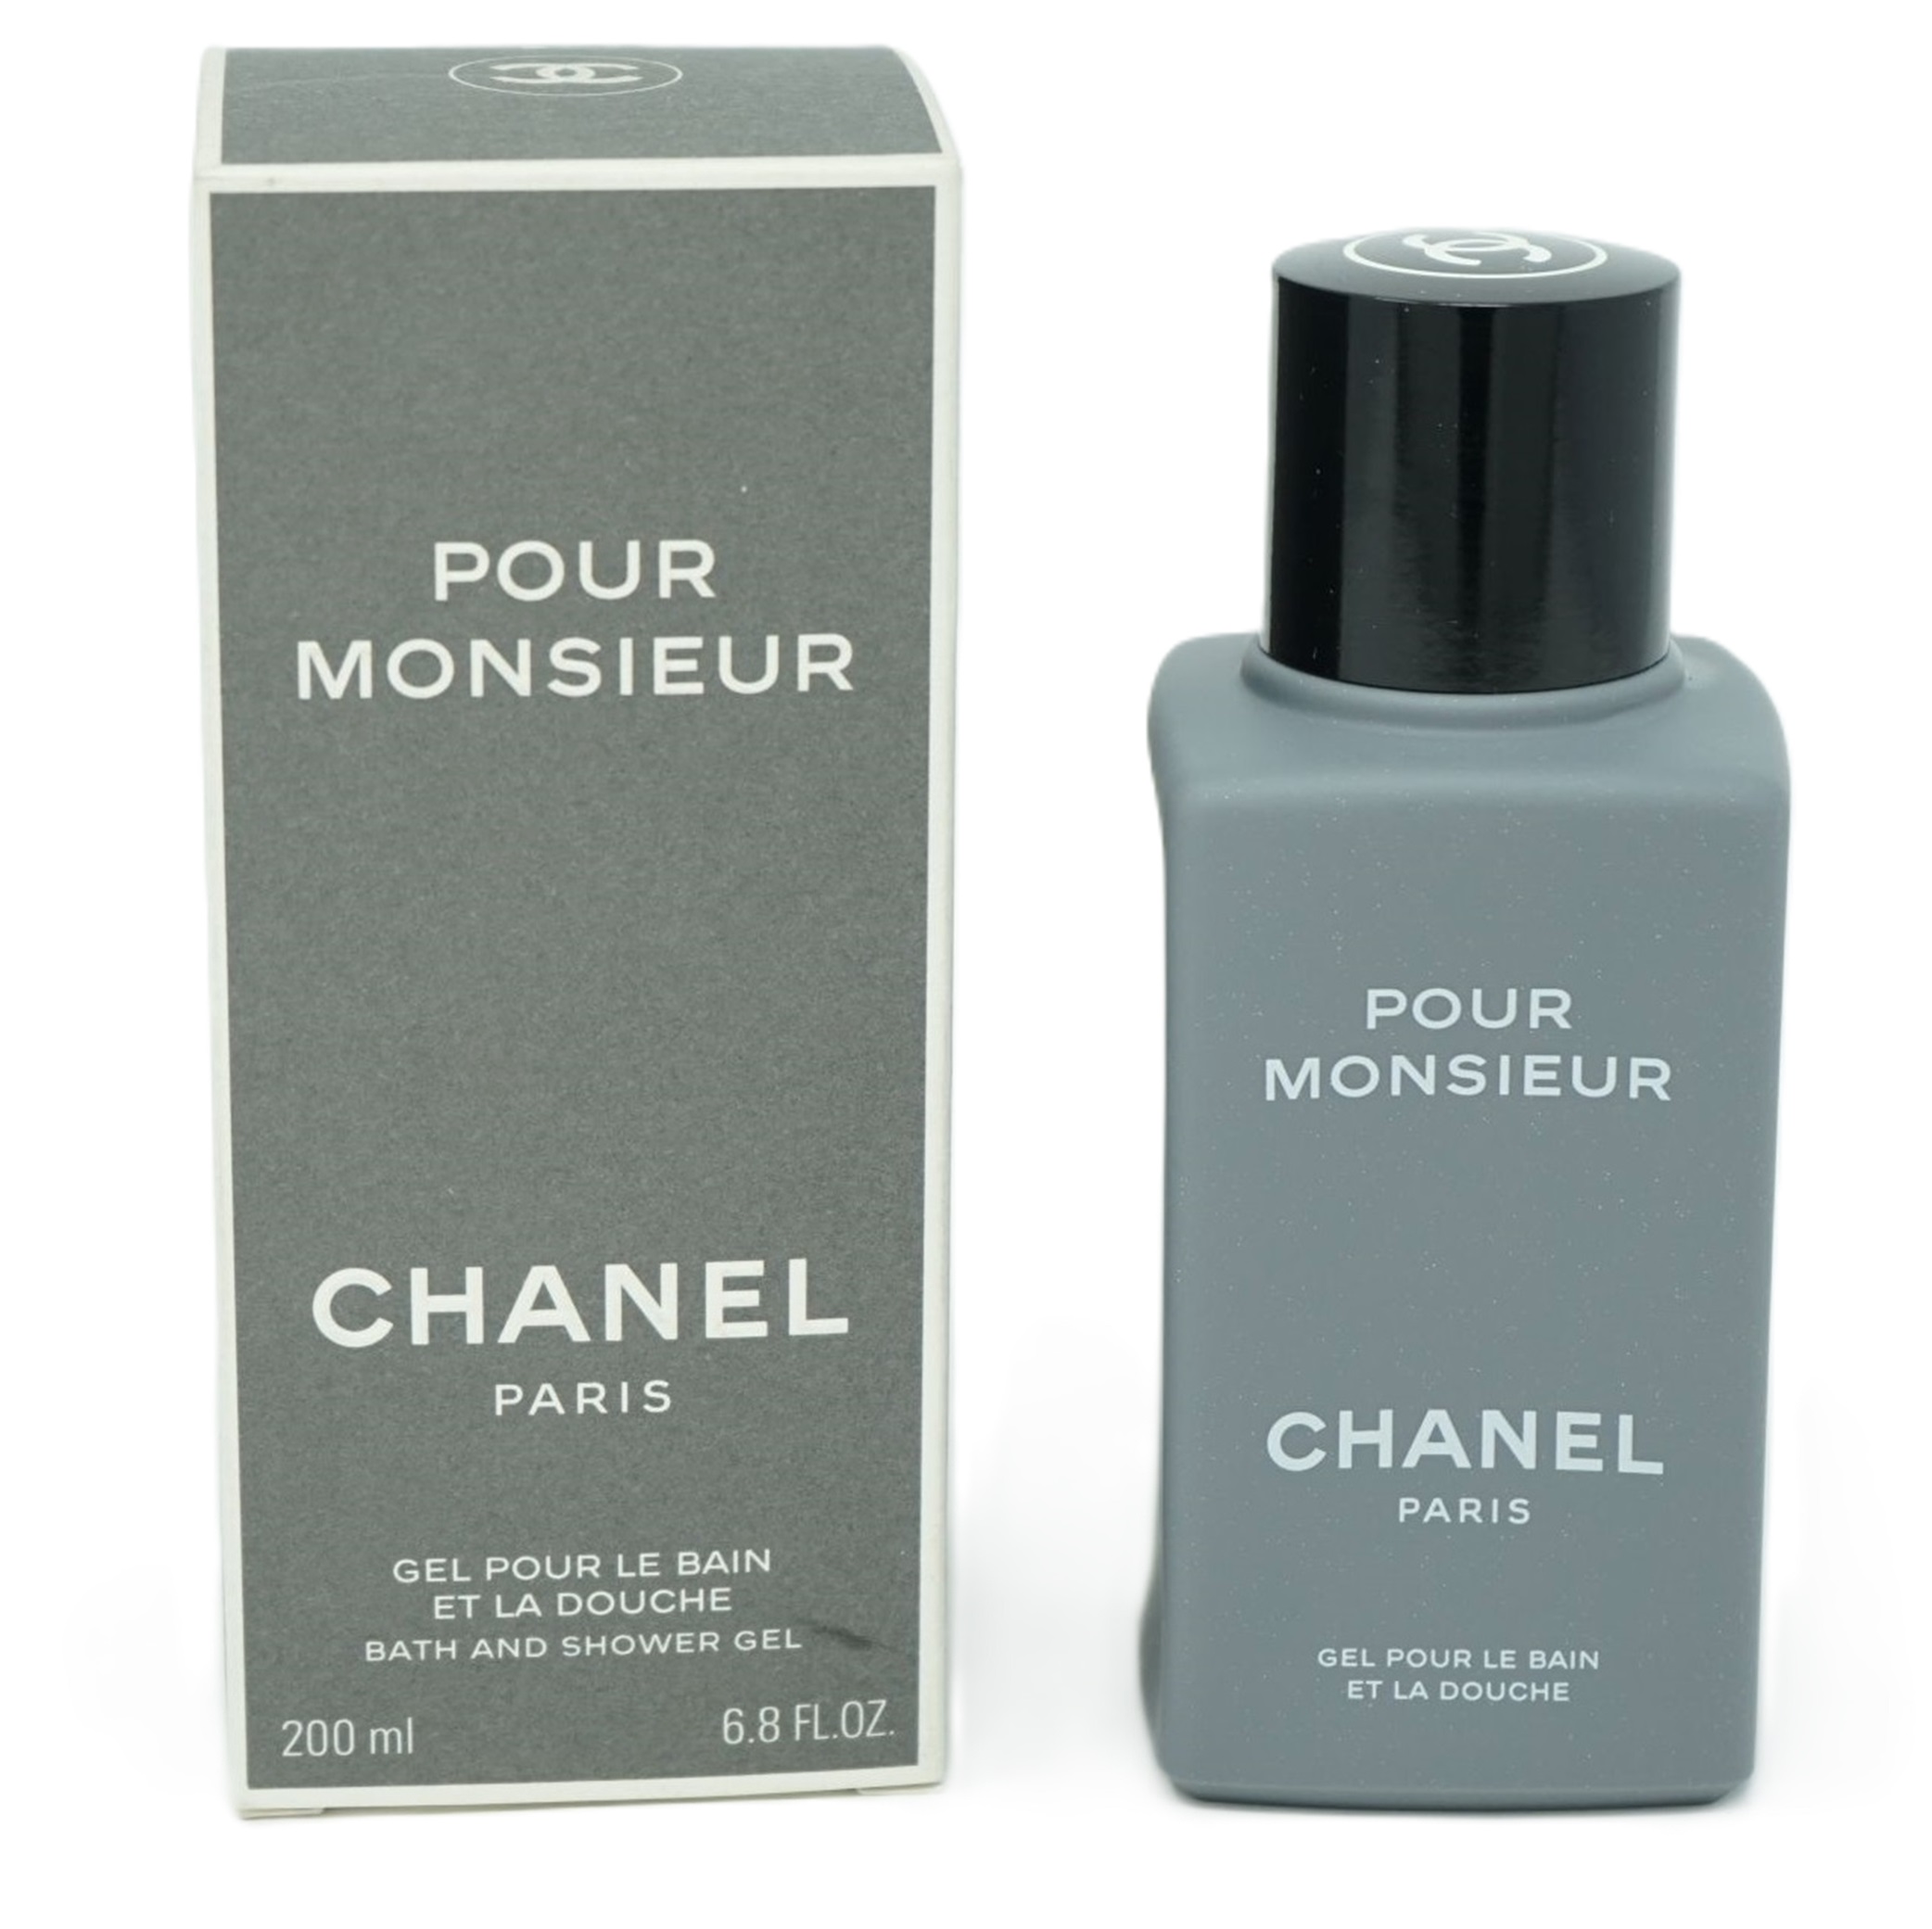 Chanel Pour Monsieur Bath and SHower Gel 200ml